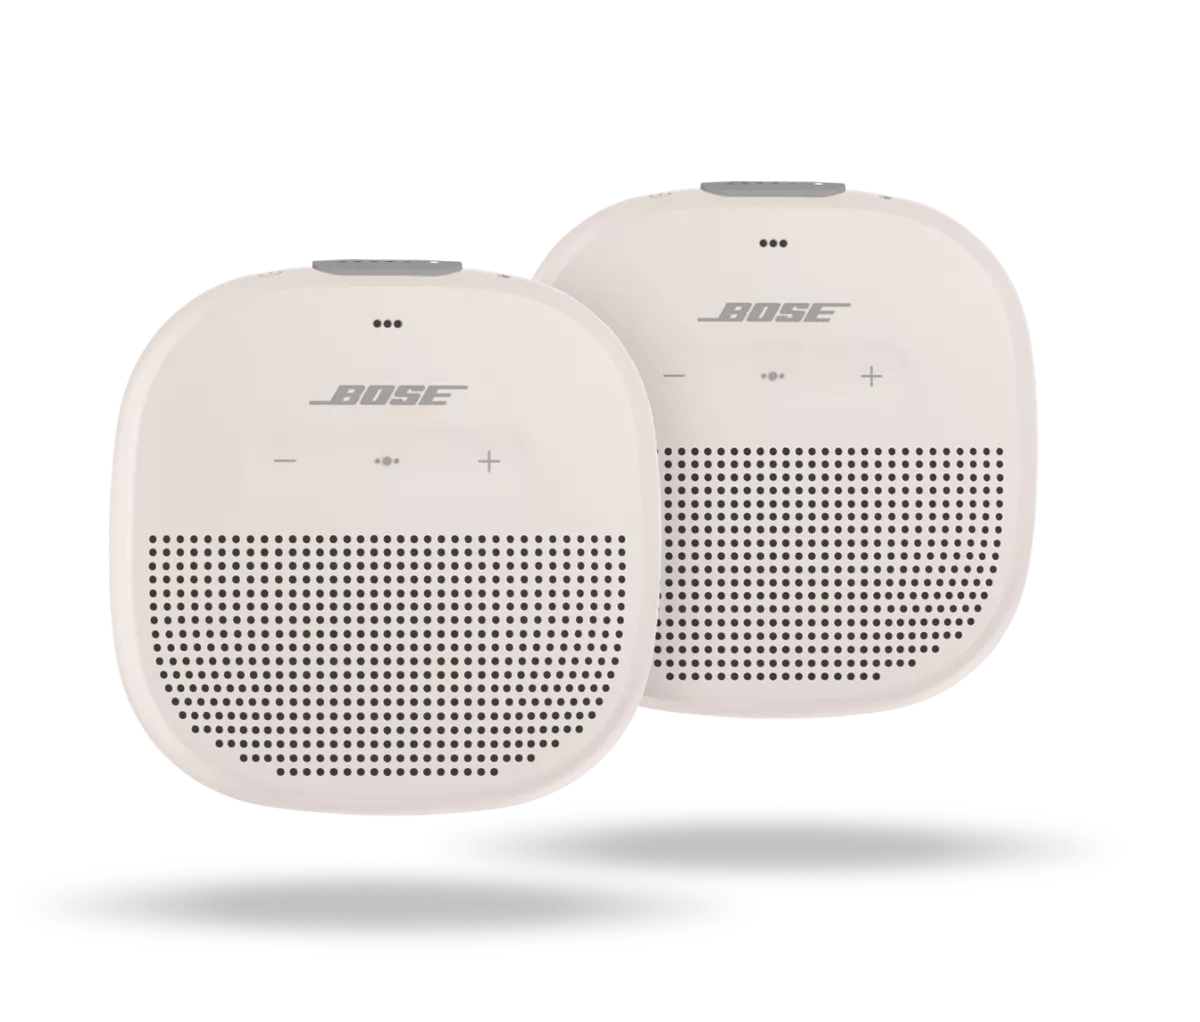 SoundLink Micro Speaker Set